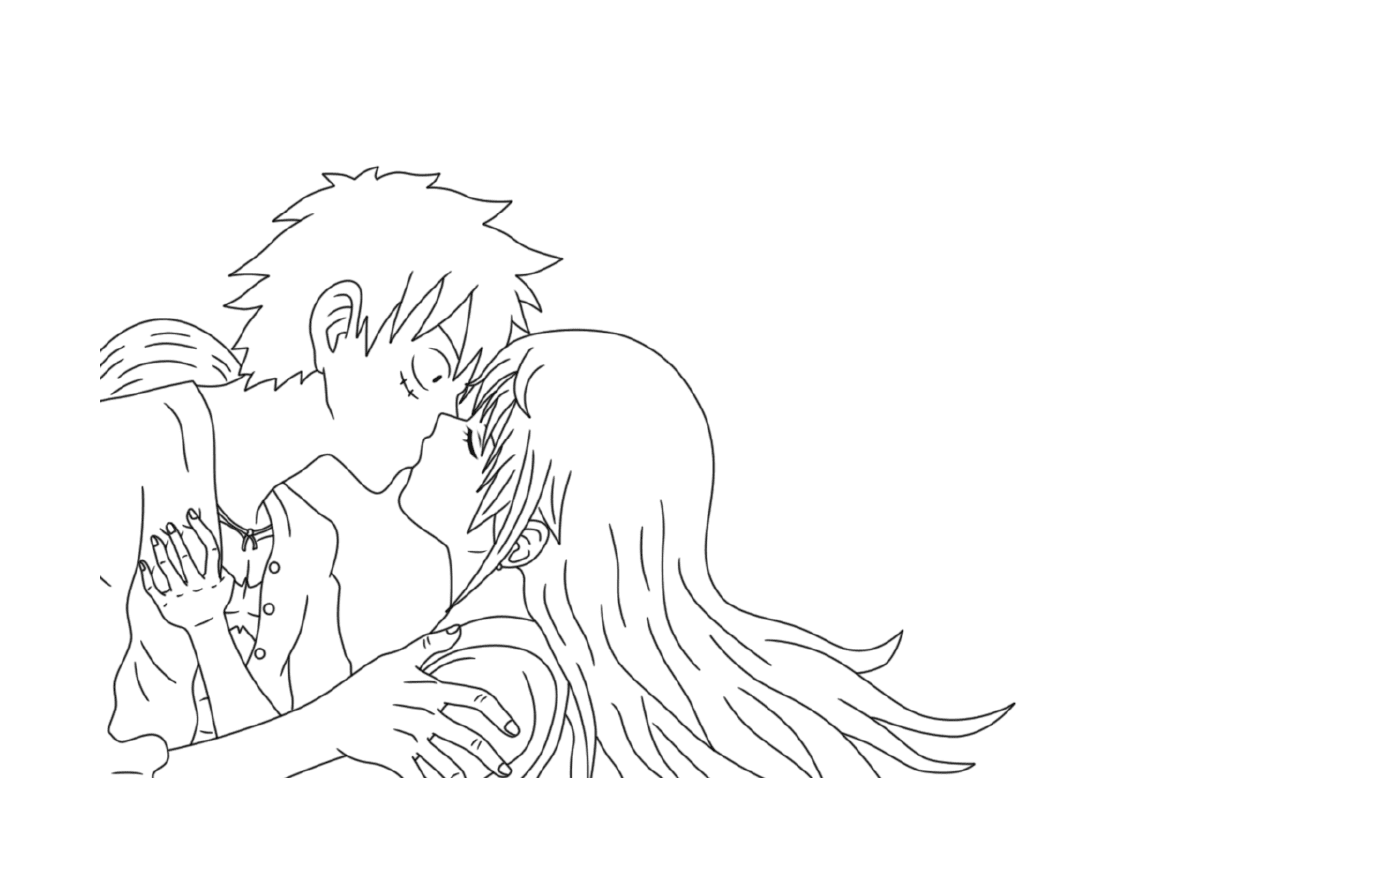  Nami and Luffy, tender kiss 